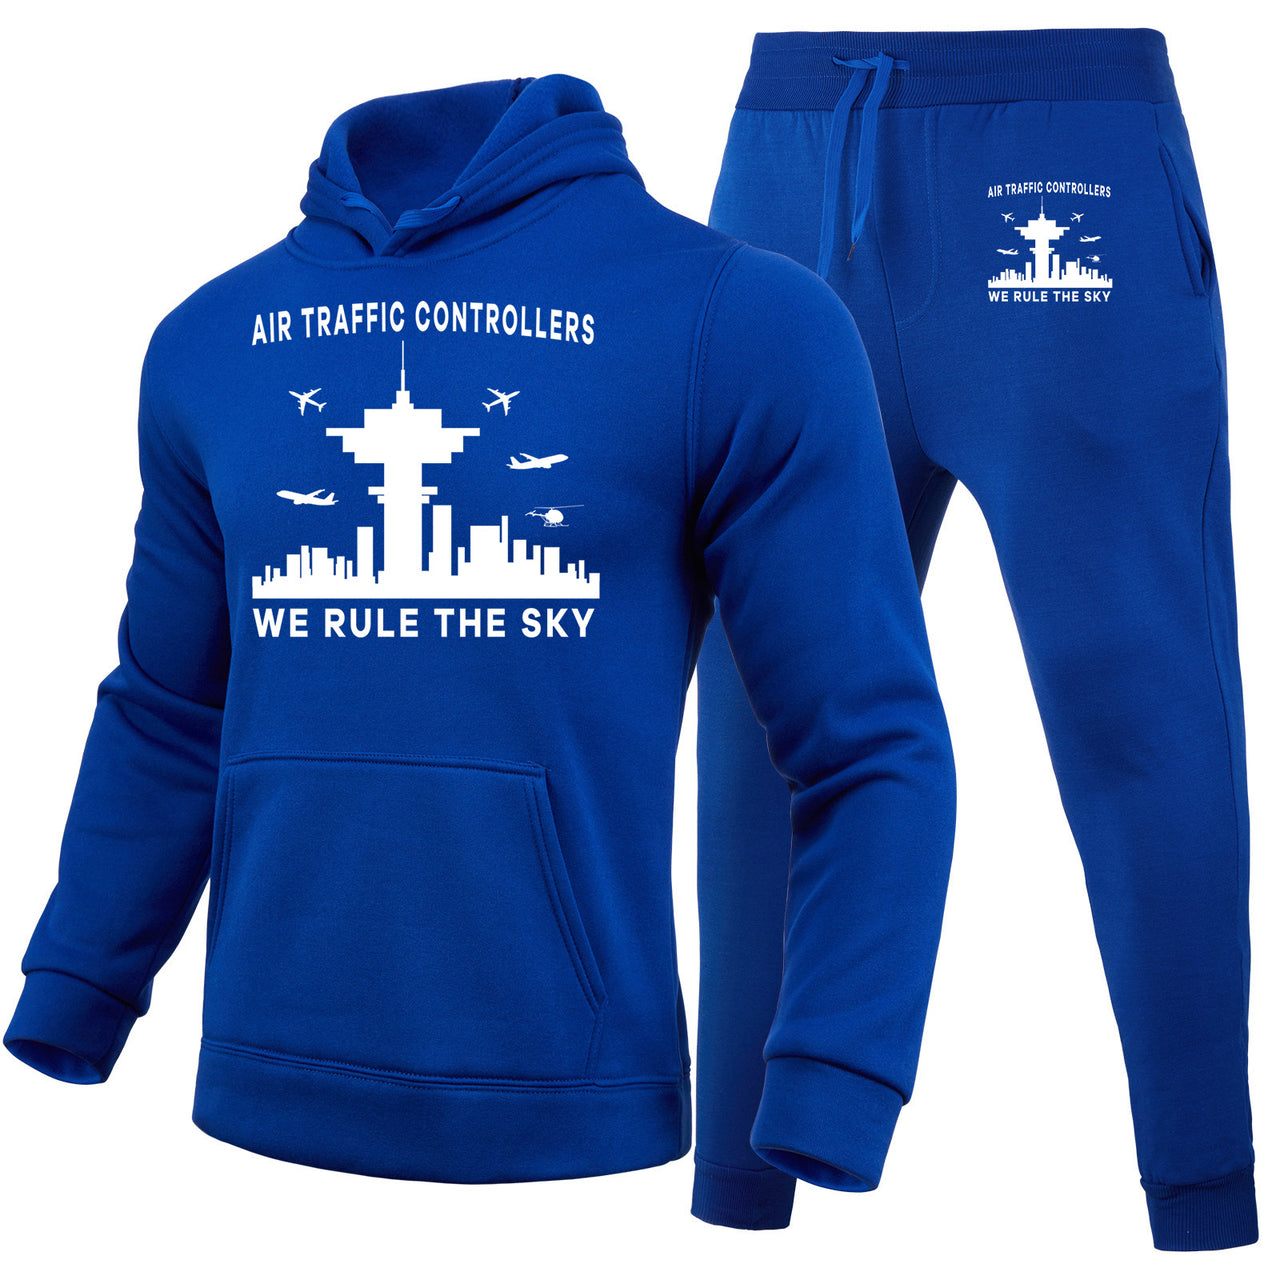 Air Traffic Controllers - We Rule The Sky Designed Hoodies & Sweatpants Set